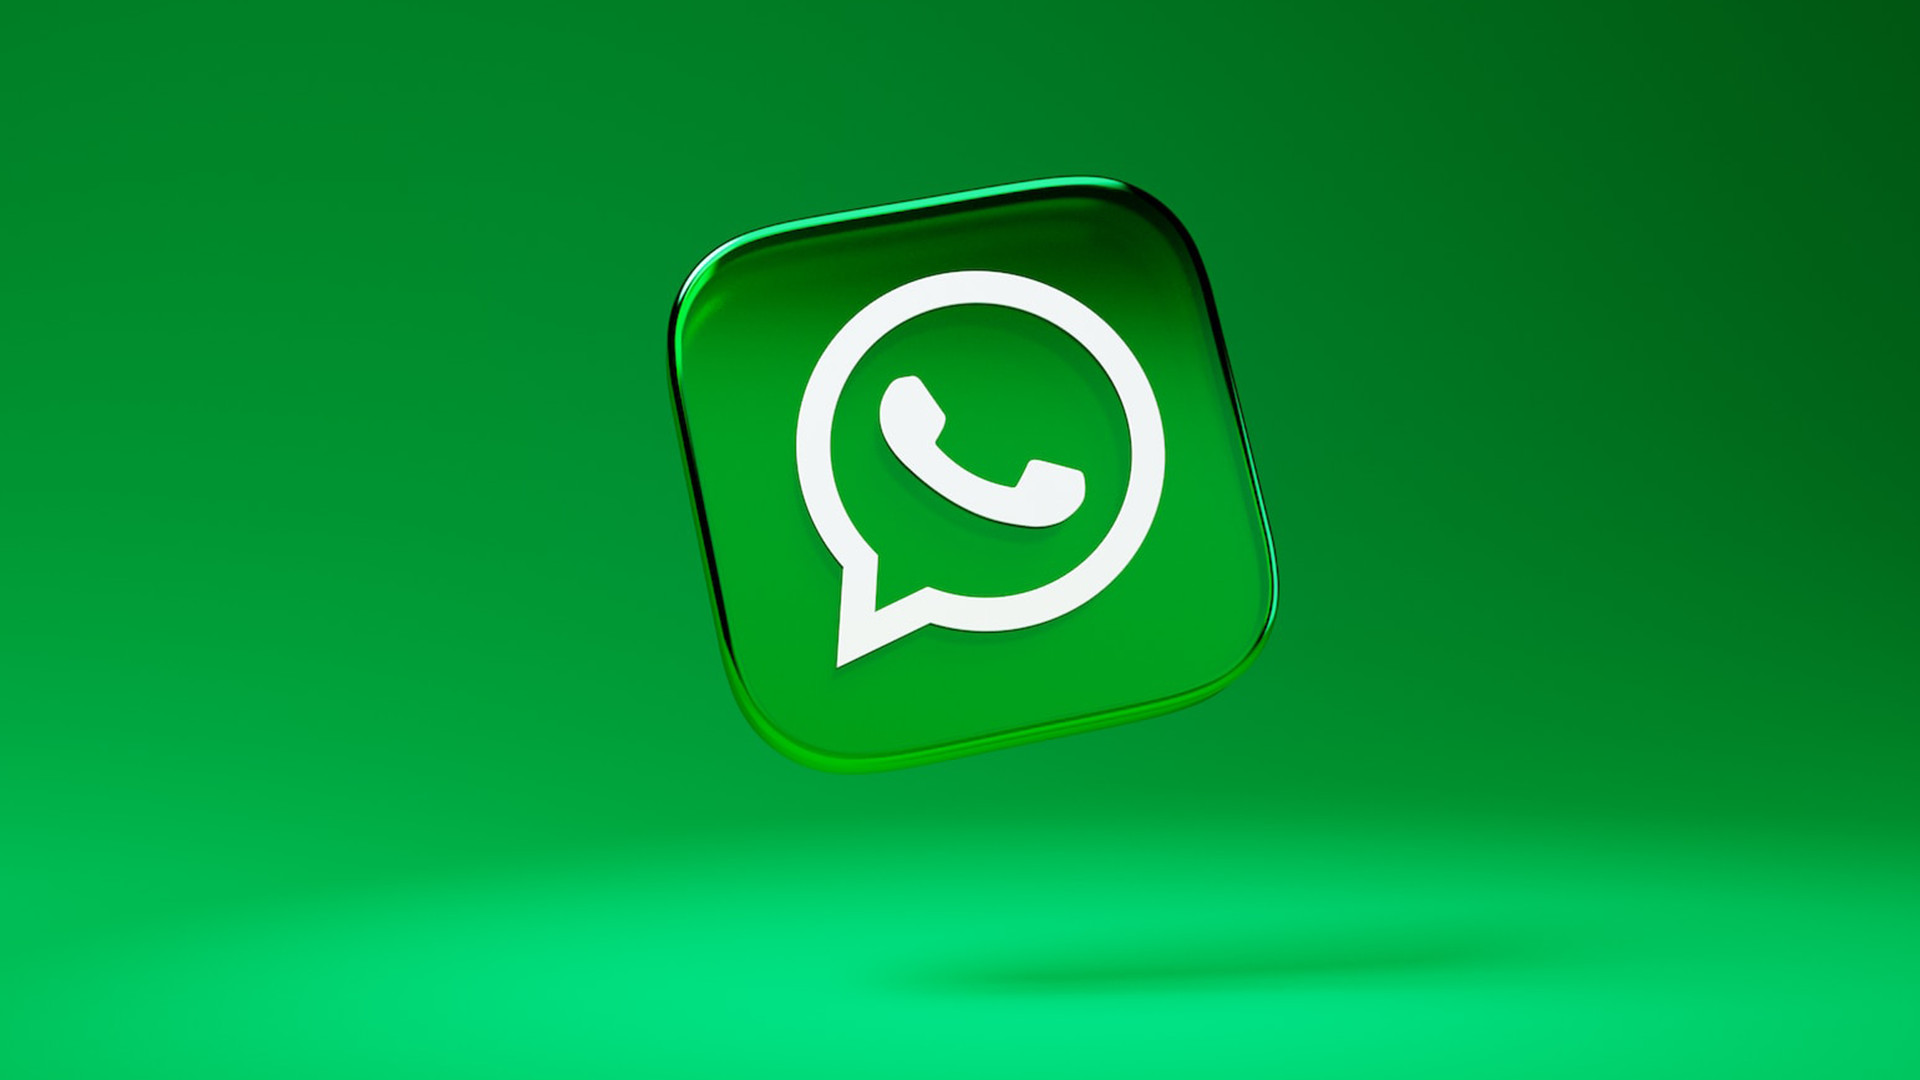 Logotipo de WhatsApp sobre un fondo verde